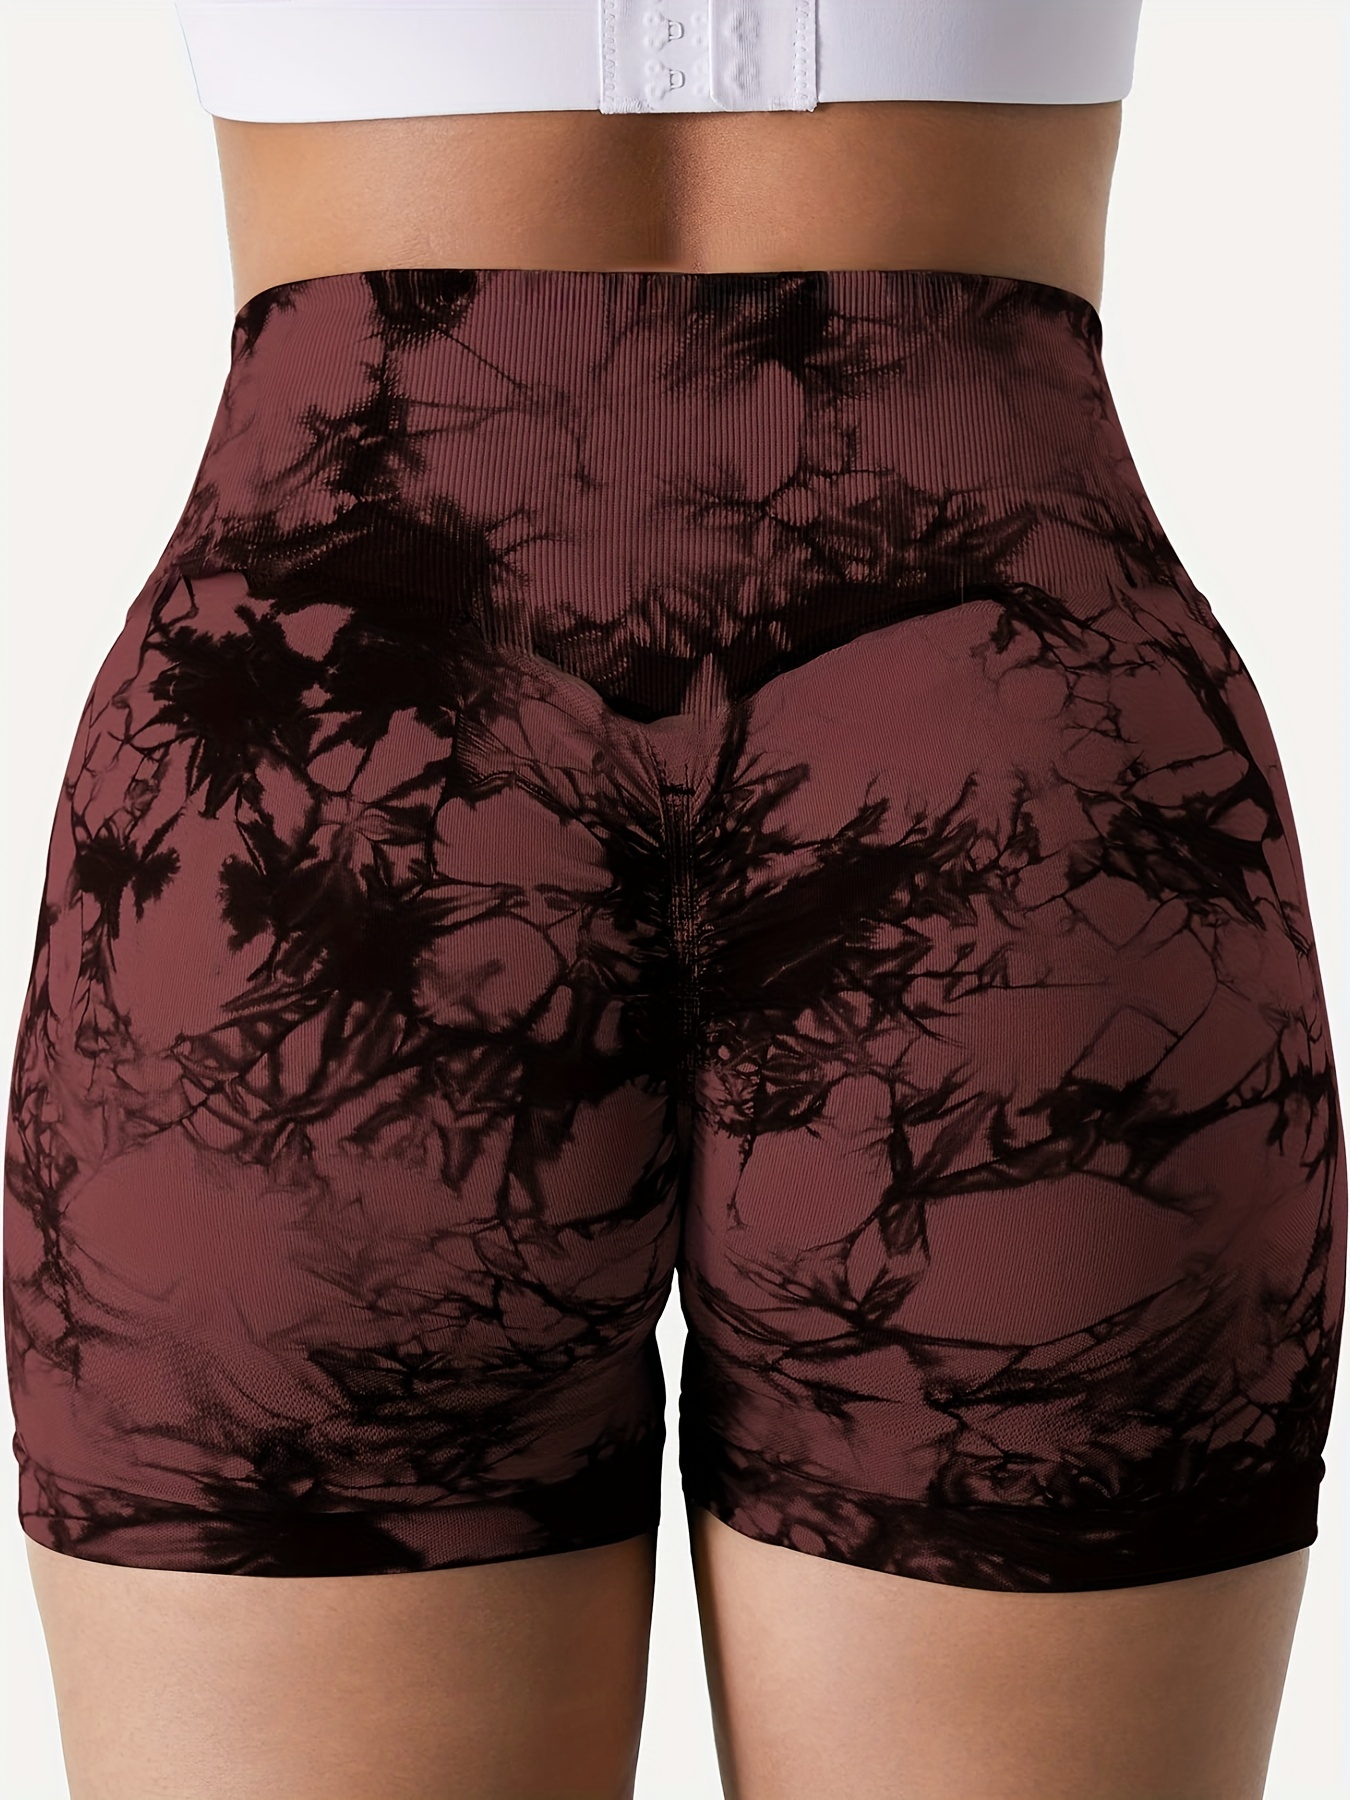 Womens Workout Shorts with Pockets Tie Dye Athletic Shorts Plain Lounge  ShortsC